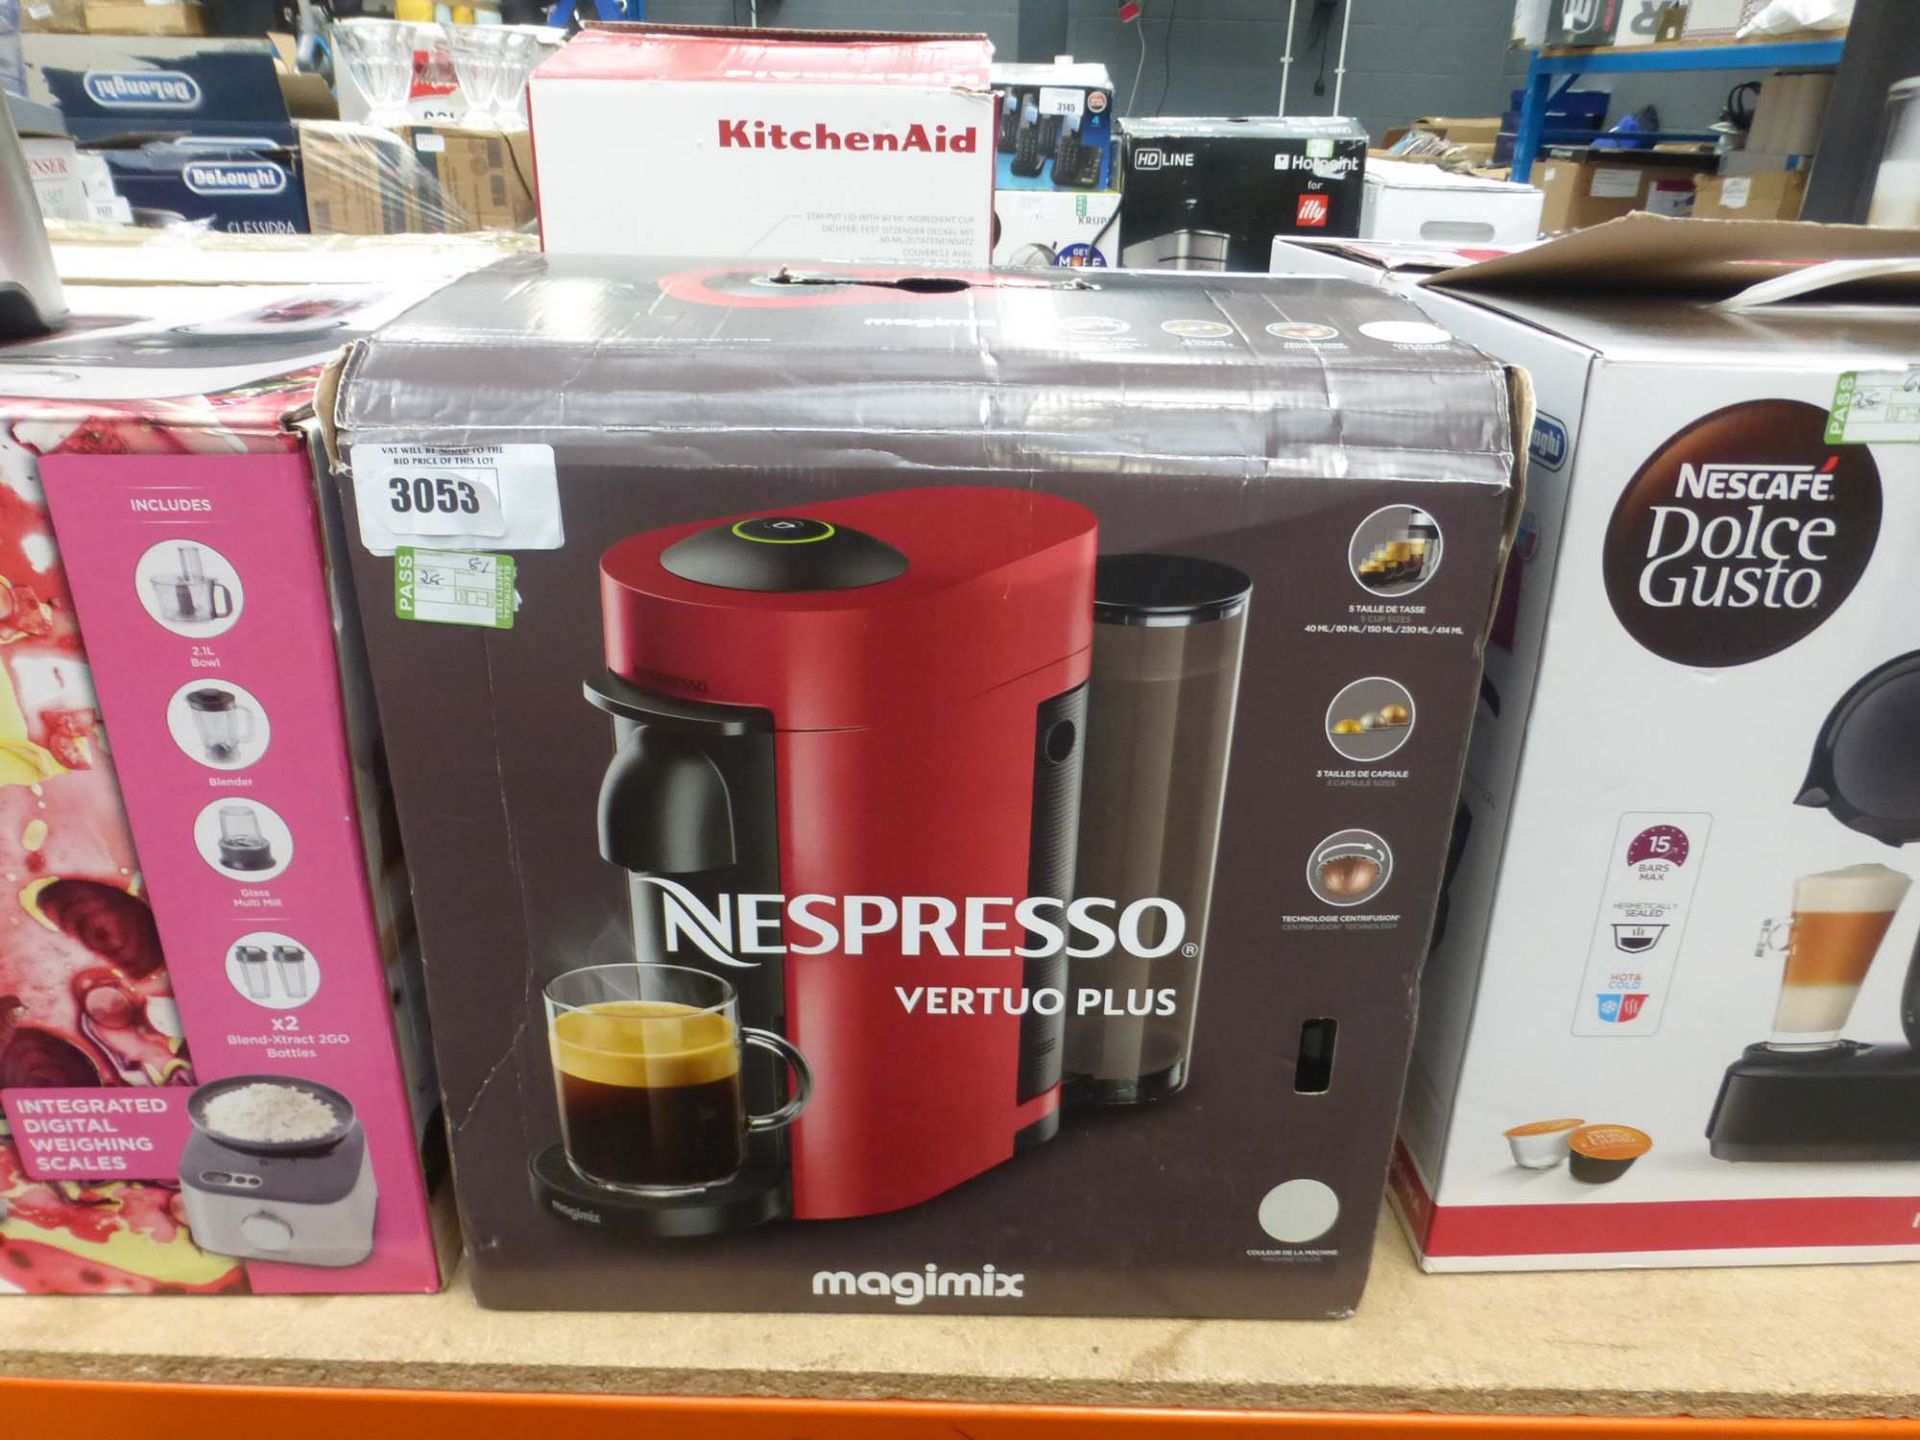 Nespress Virtue Plus magimix coffee machine